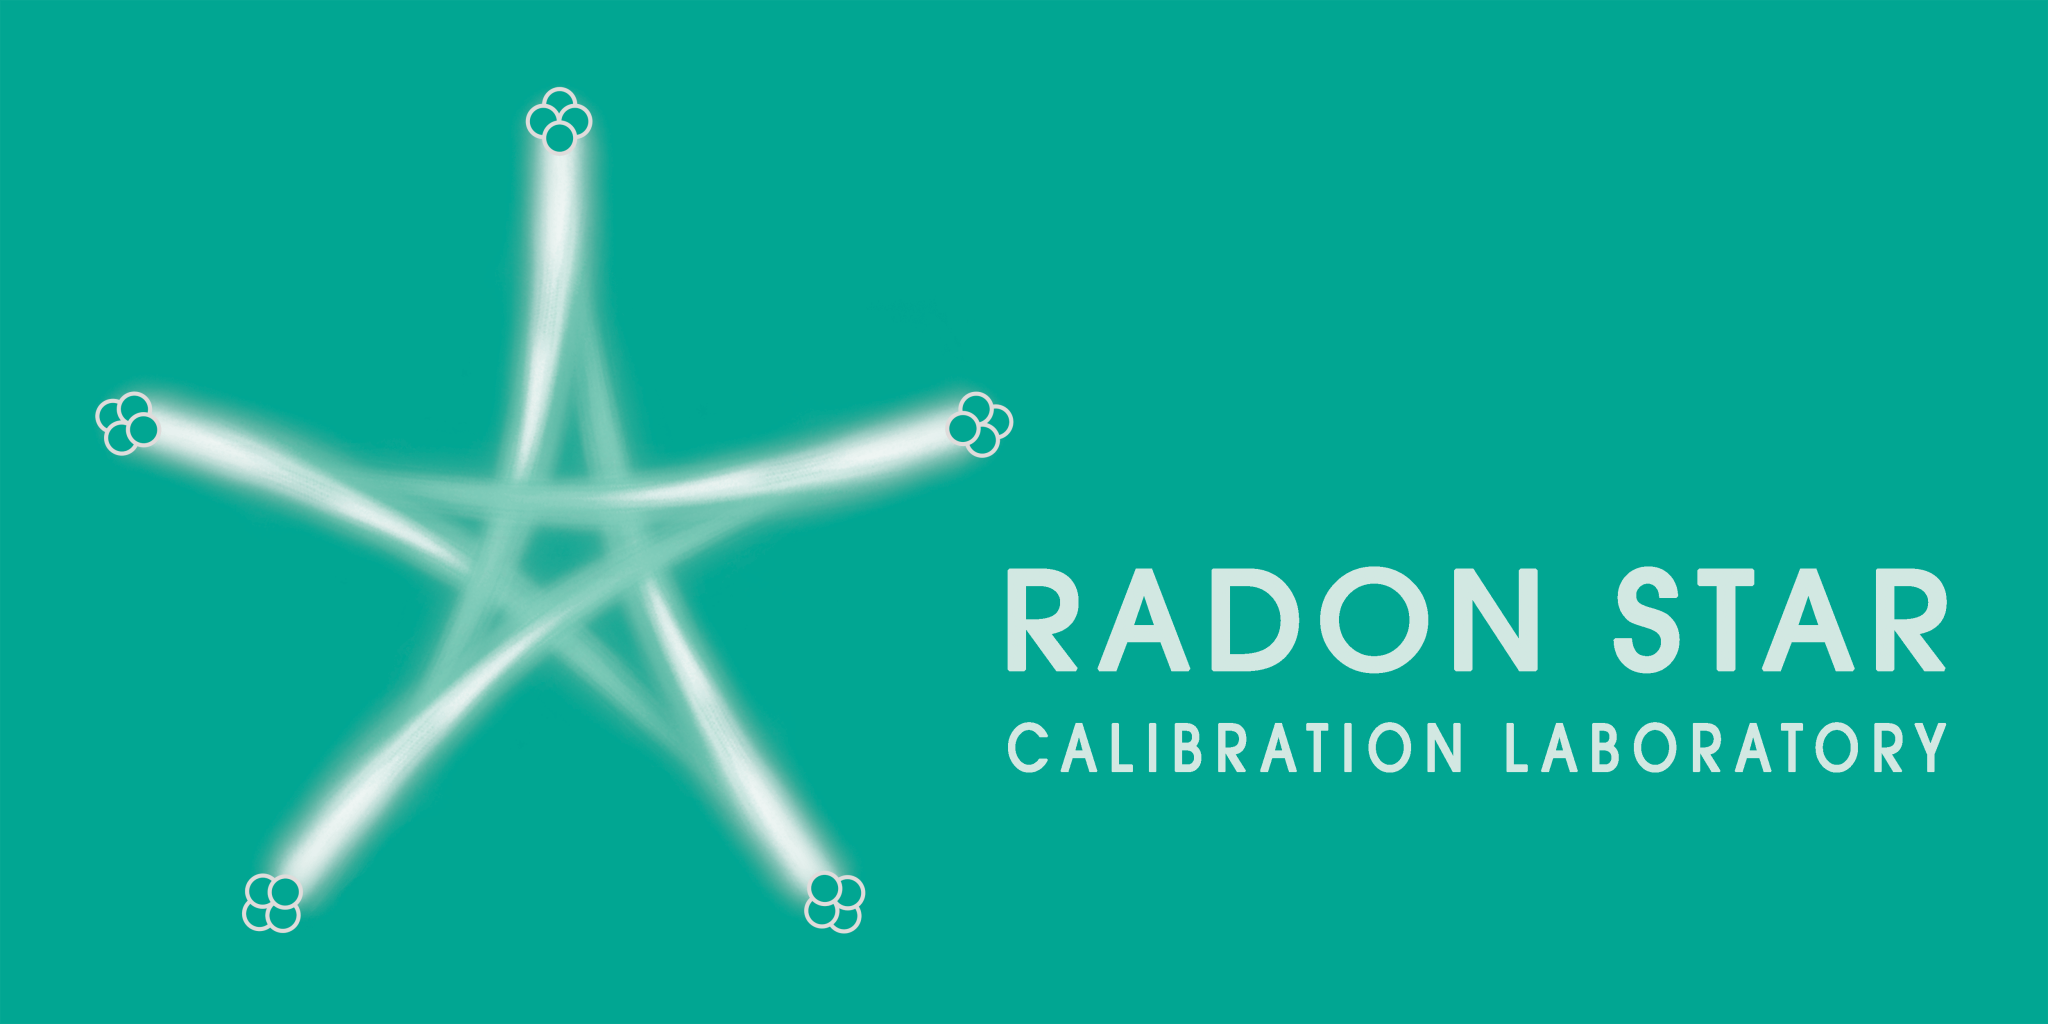 RAD7 - Radoninstruments.com (EN)